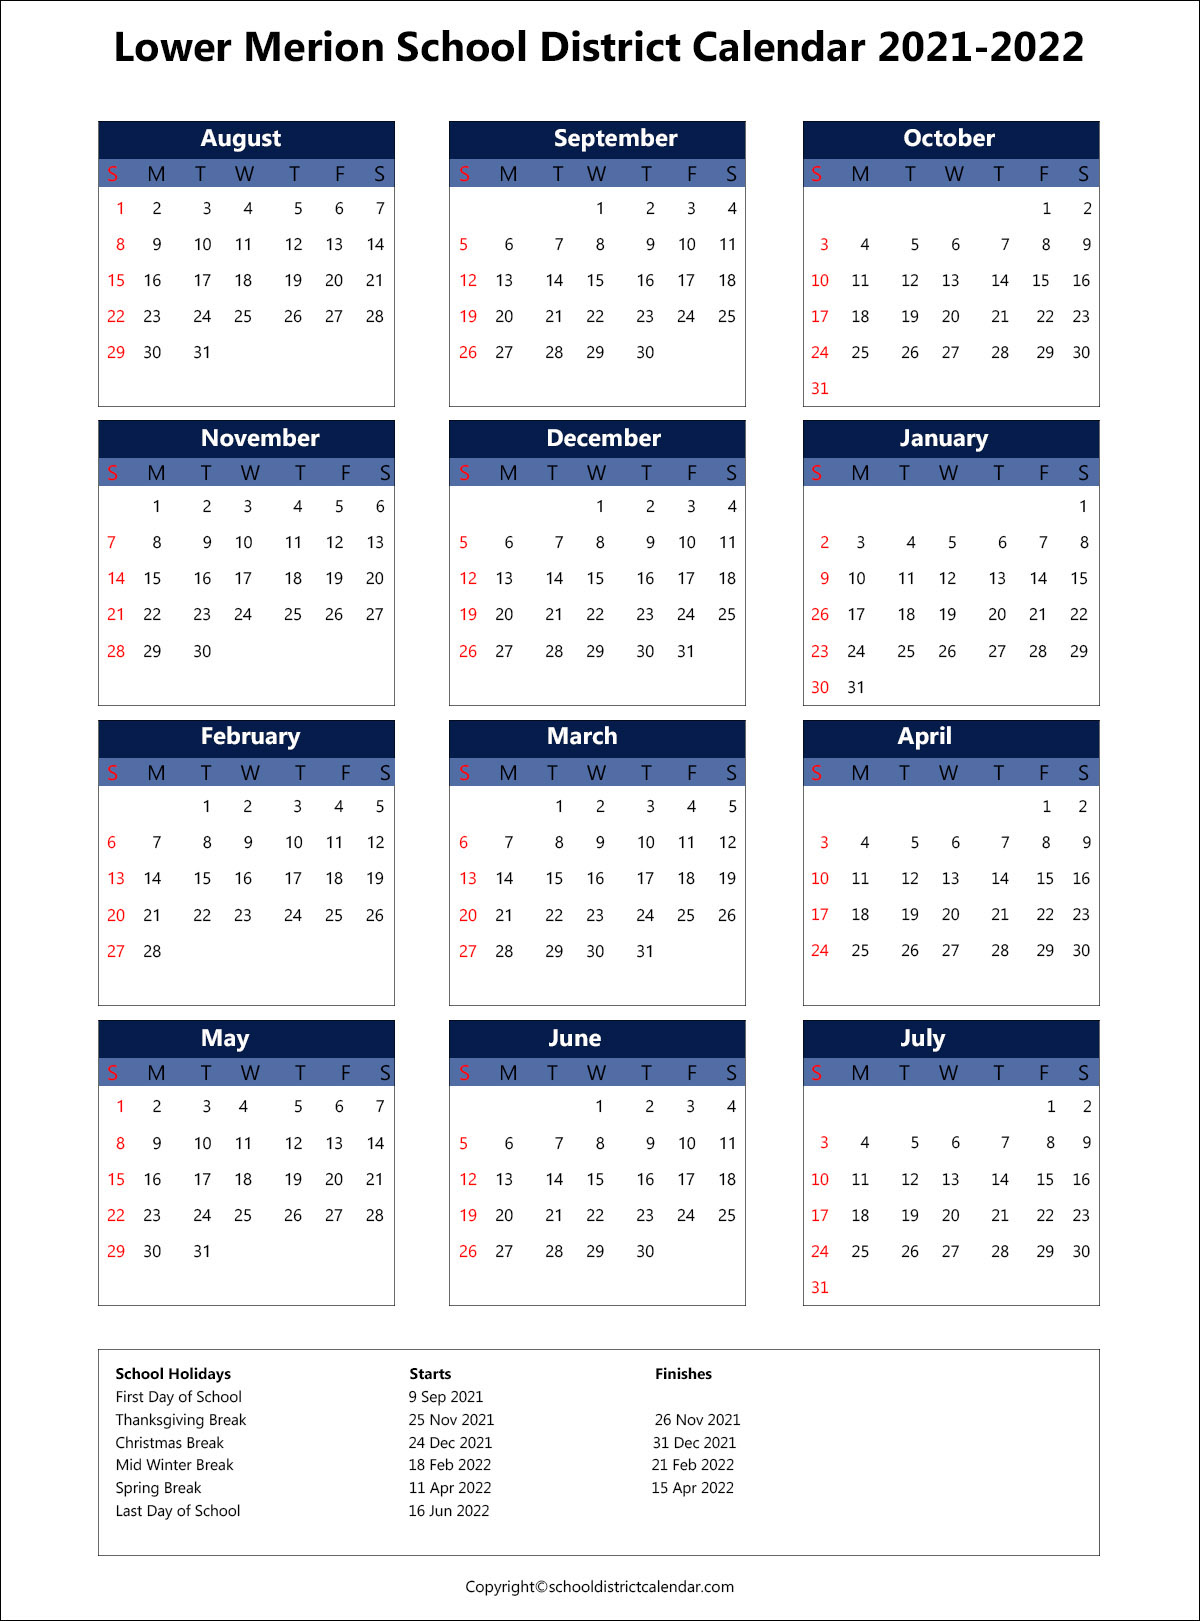 Lower Merion School District Calendar 2021